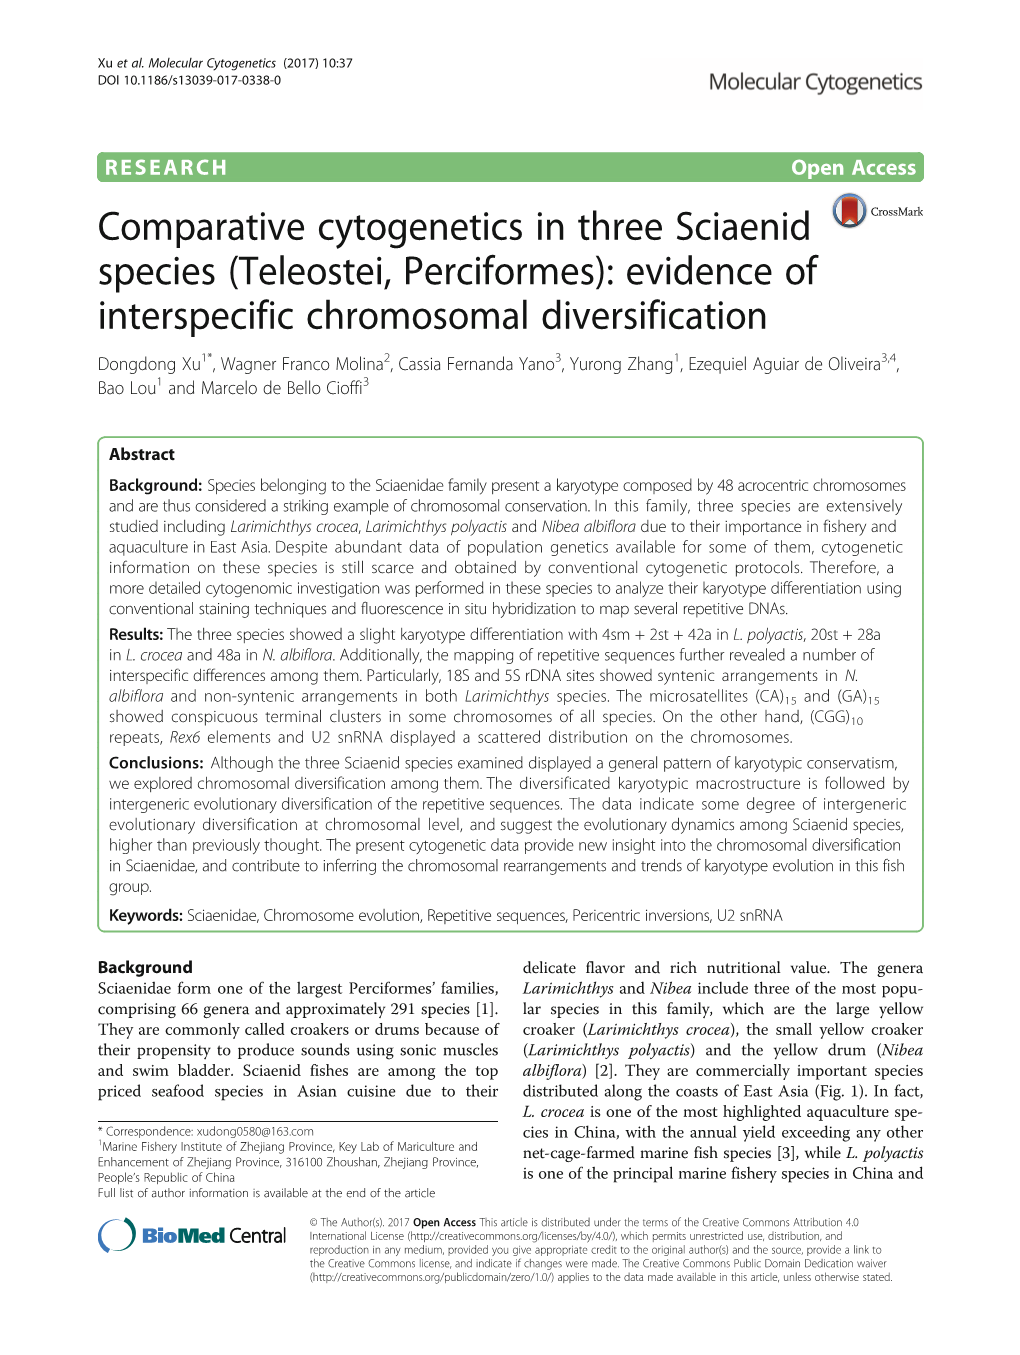 Comparative Cytogenetics in Three Sciaenid Species (Teleostei